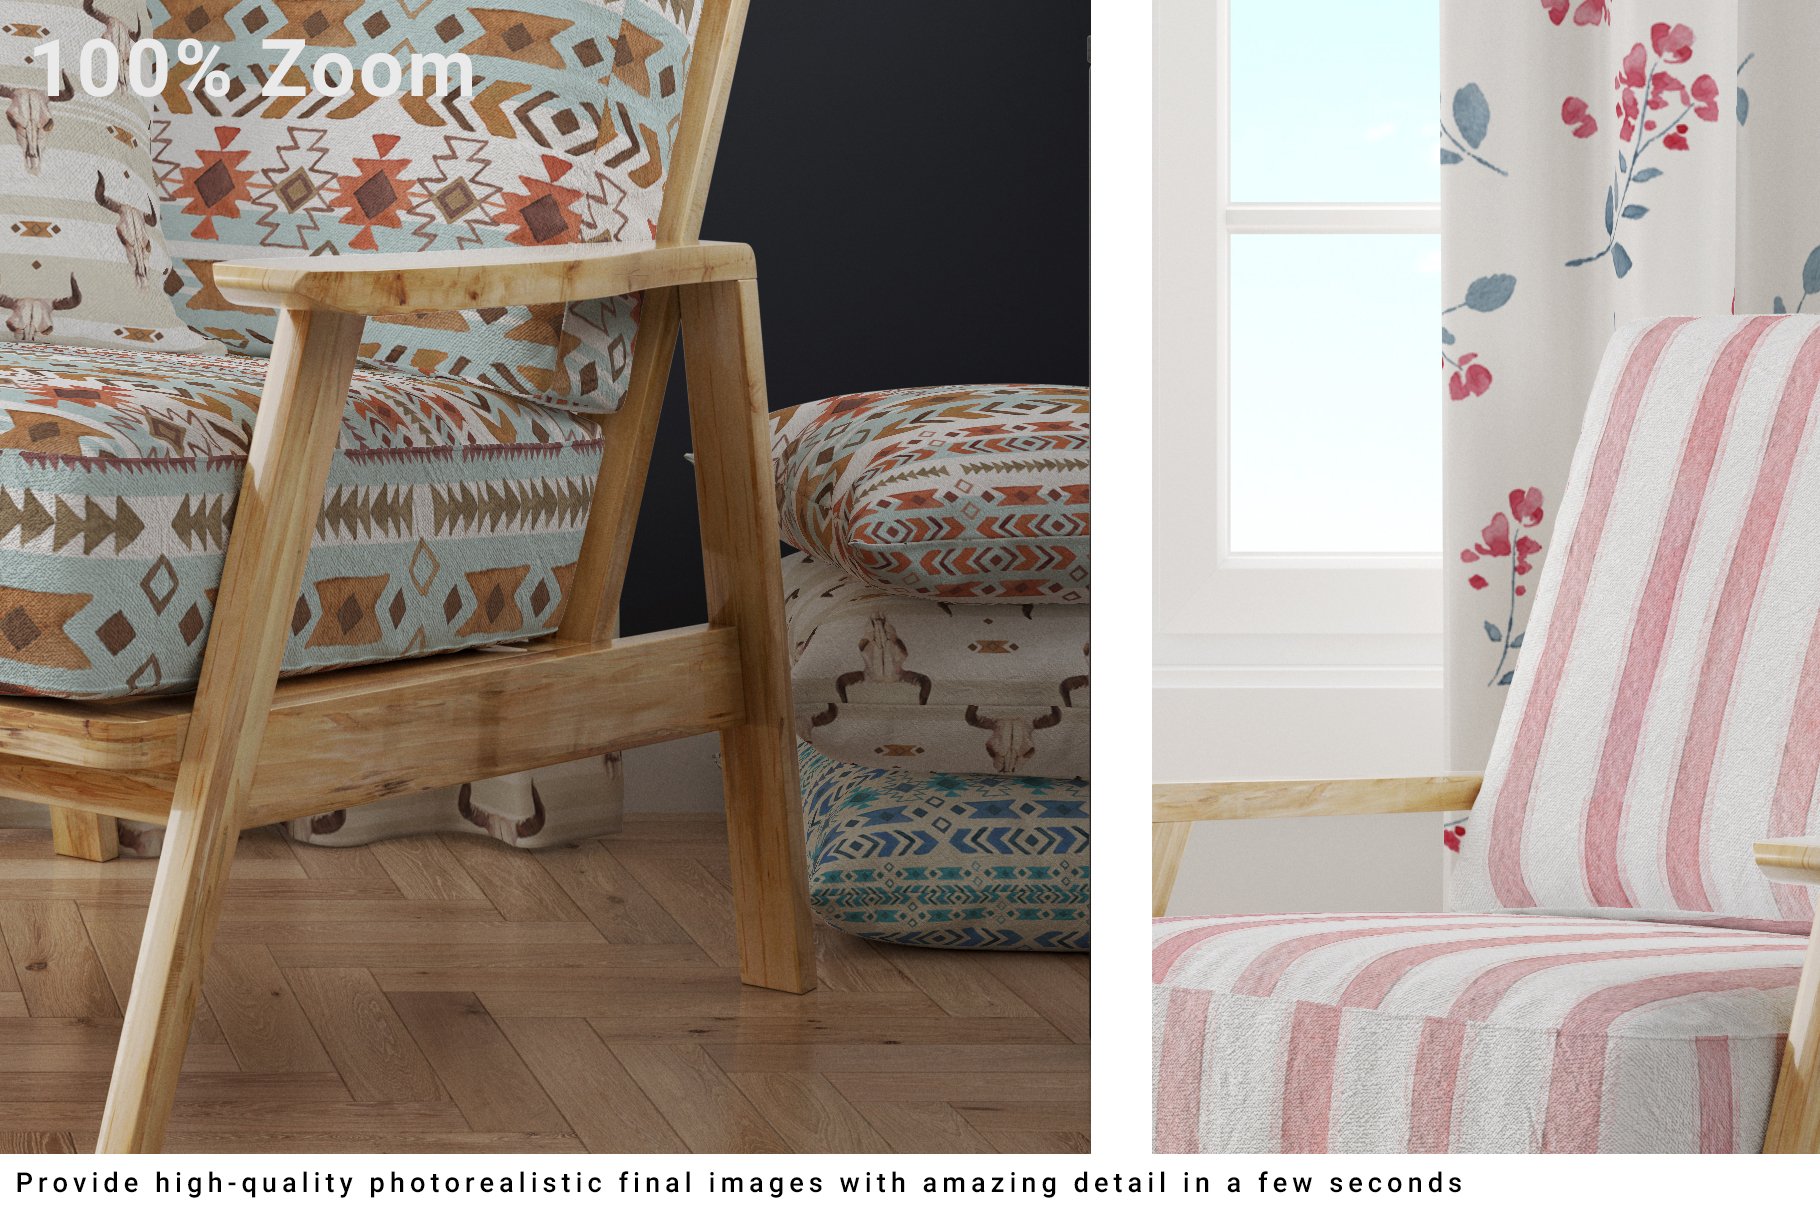 Upholstery Armchair Curtains & Pillows Set